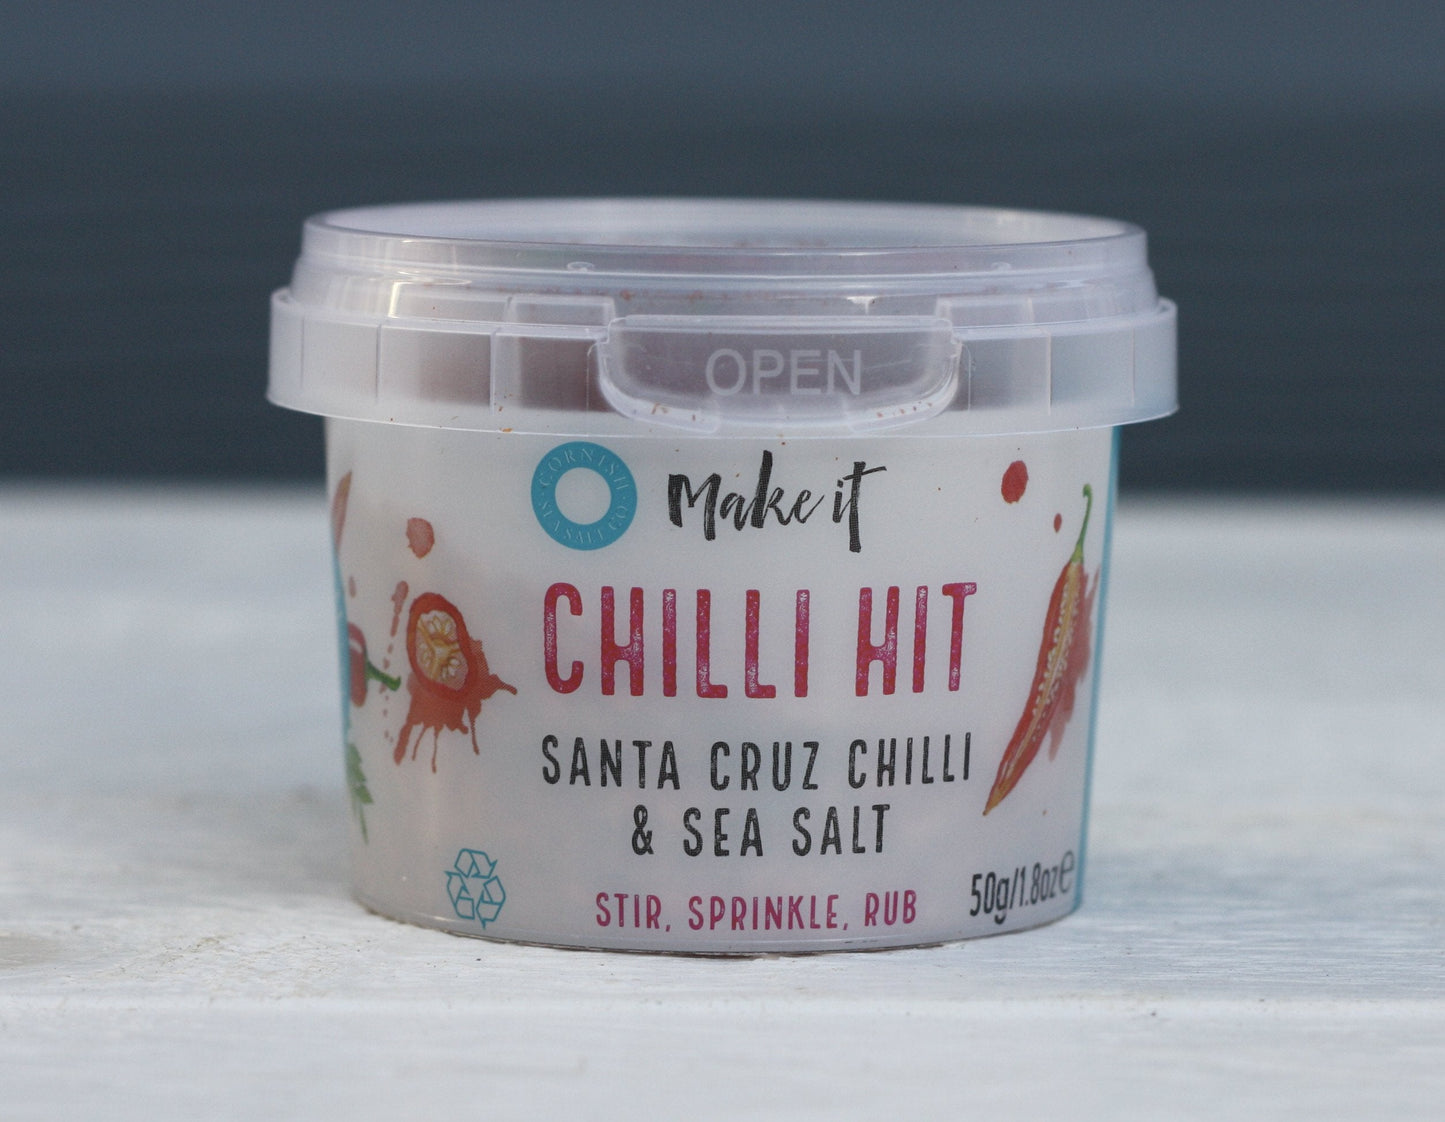 Blue Garlic Dish Set with Chilli Hit Cornish Sea Salt